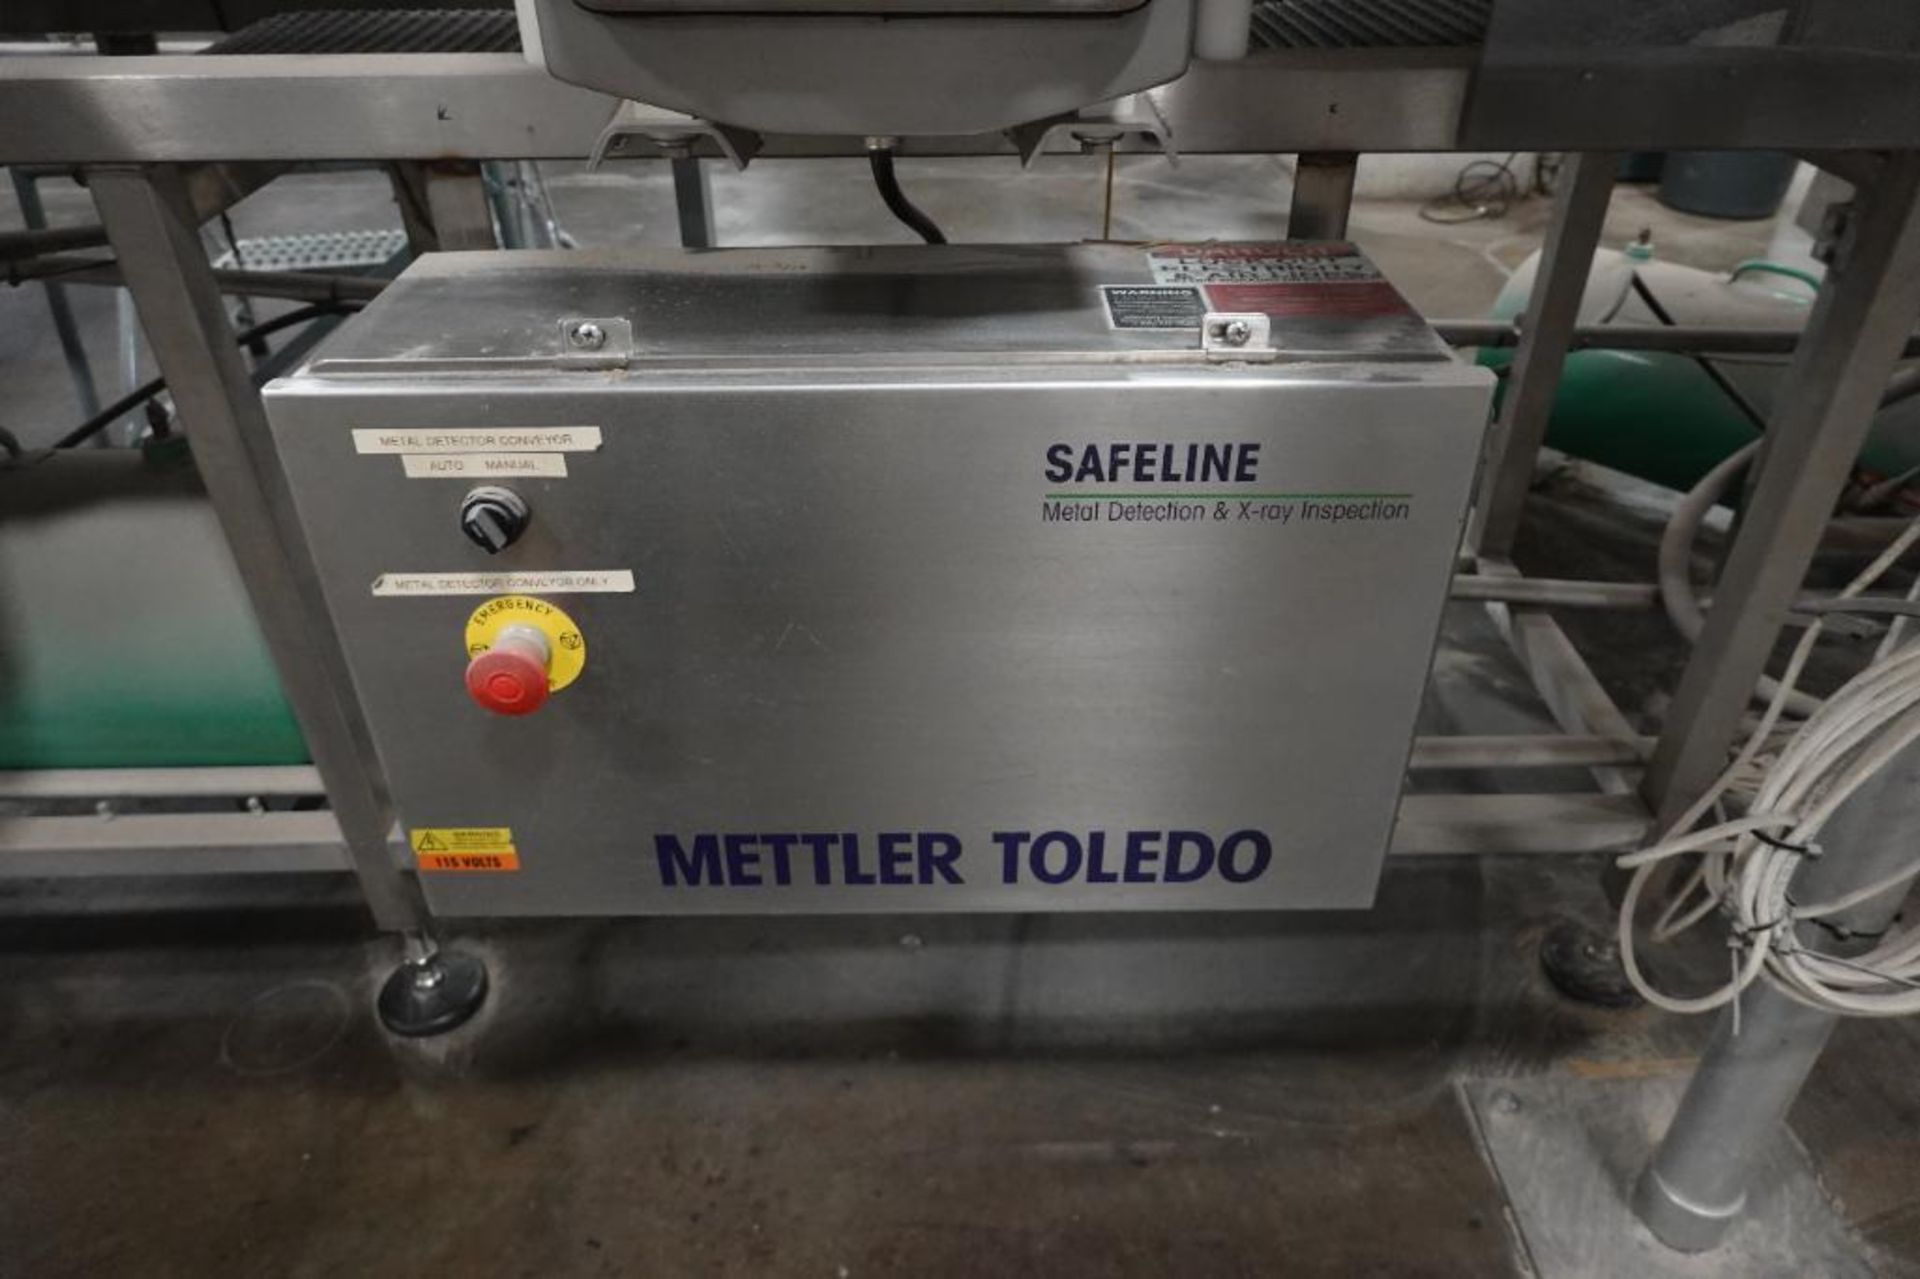 2010 Safeline Certus metal detector with conveyor - Image 9 of 11